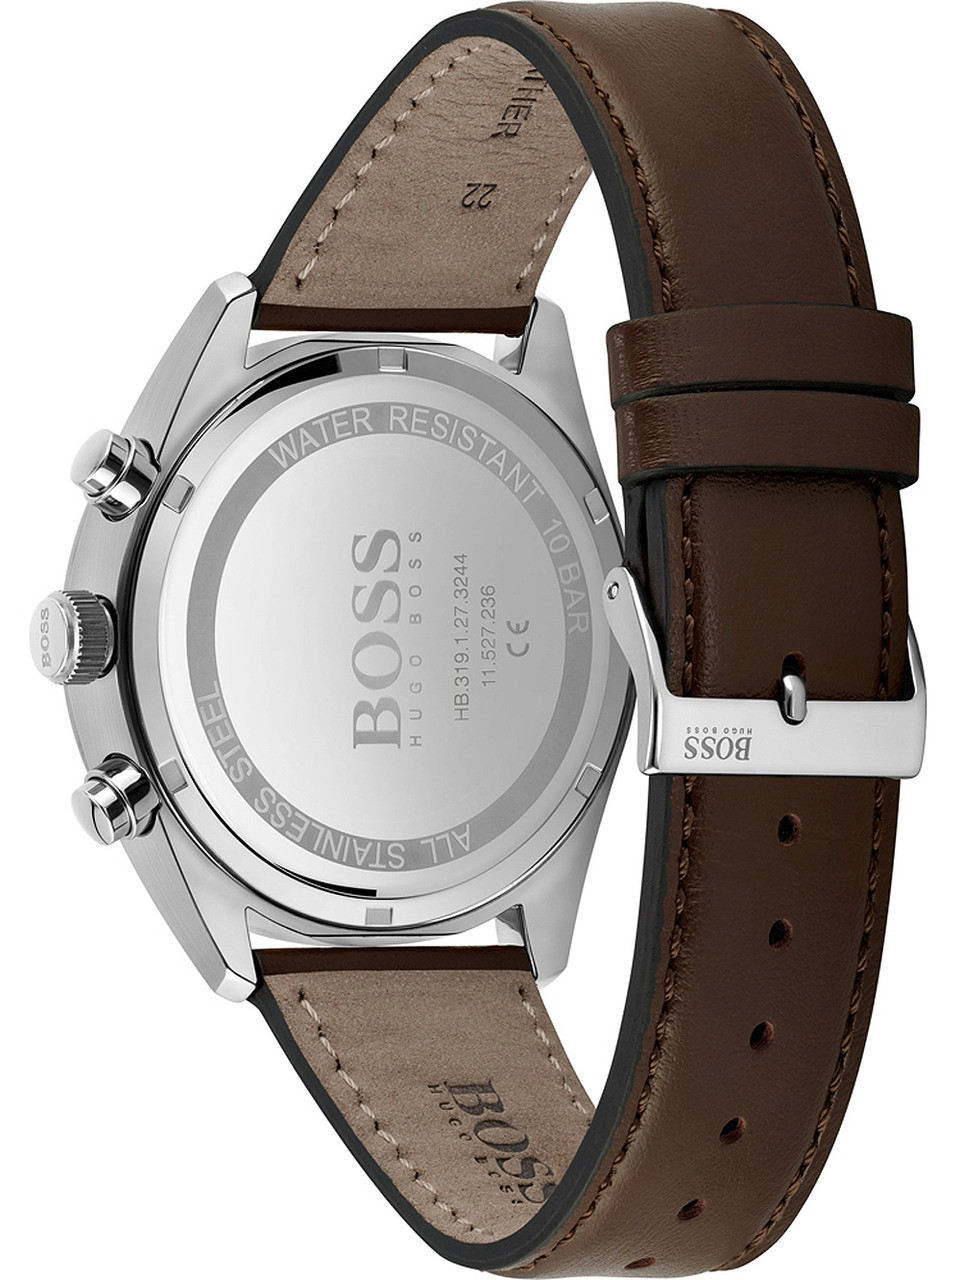 Hugo Boss 1513815 Champion - 10ATM Watches 44mm chrono owlica | Genuine